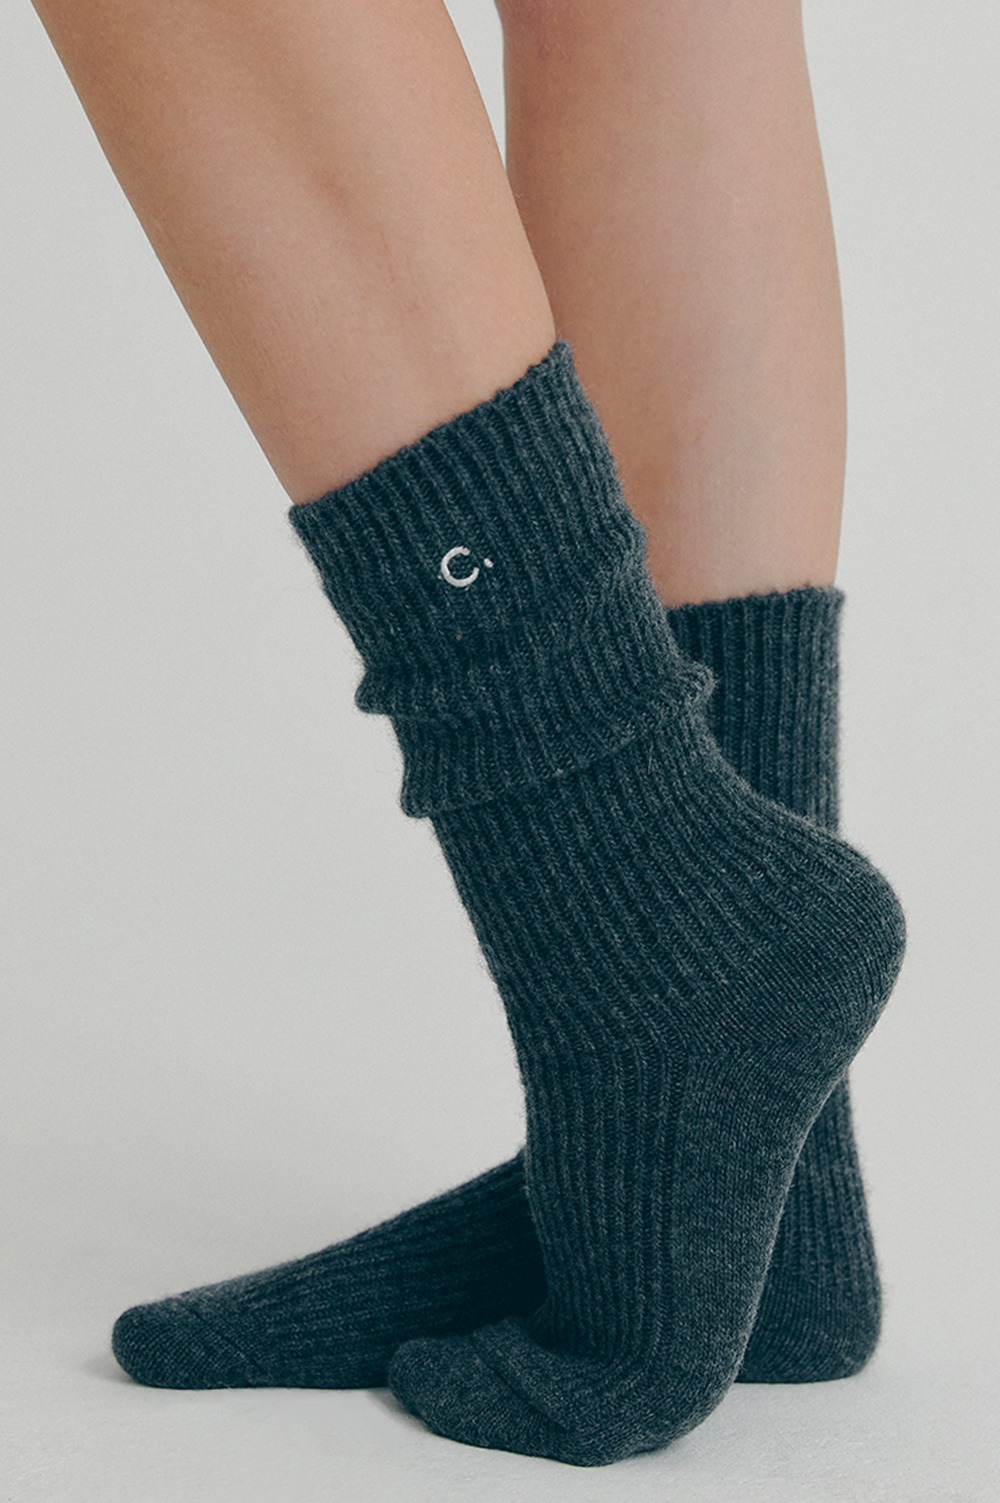 clove - [22FW clove] Cashmere Blended Socks (Charcoal)